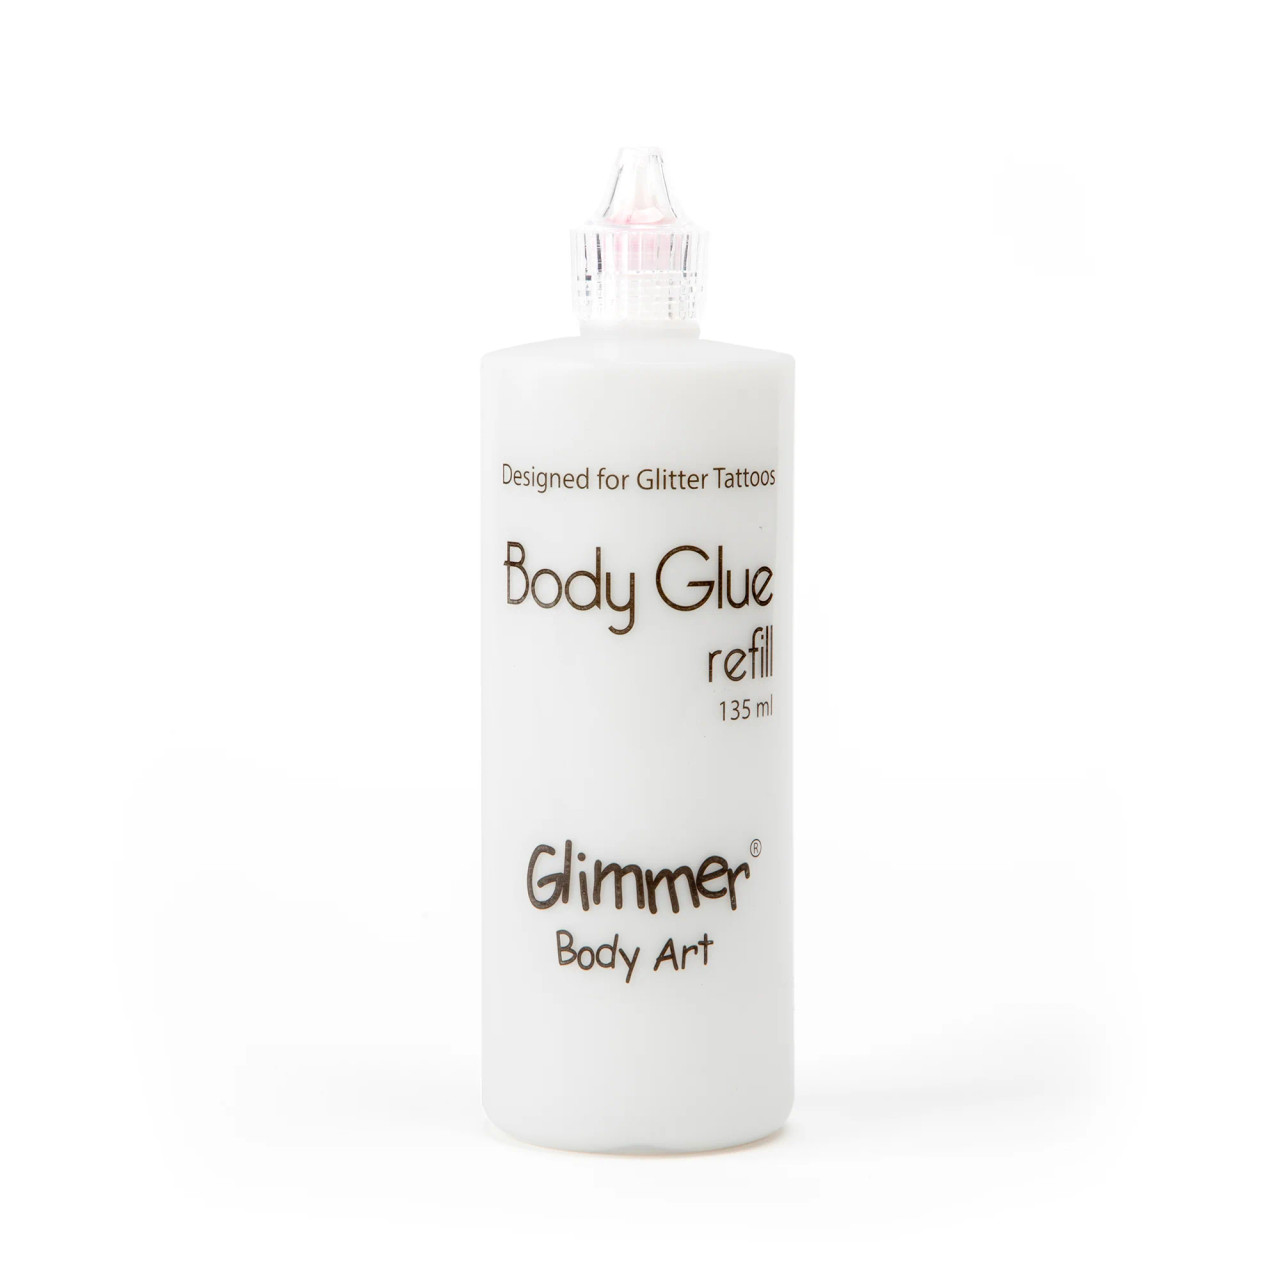 Glimmer Body Glue Refill XL- 135ml NEW Size